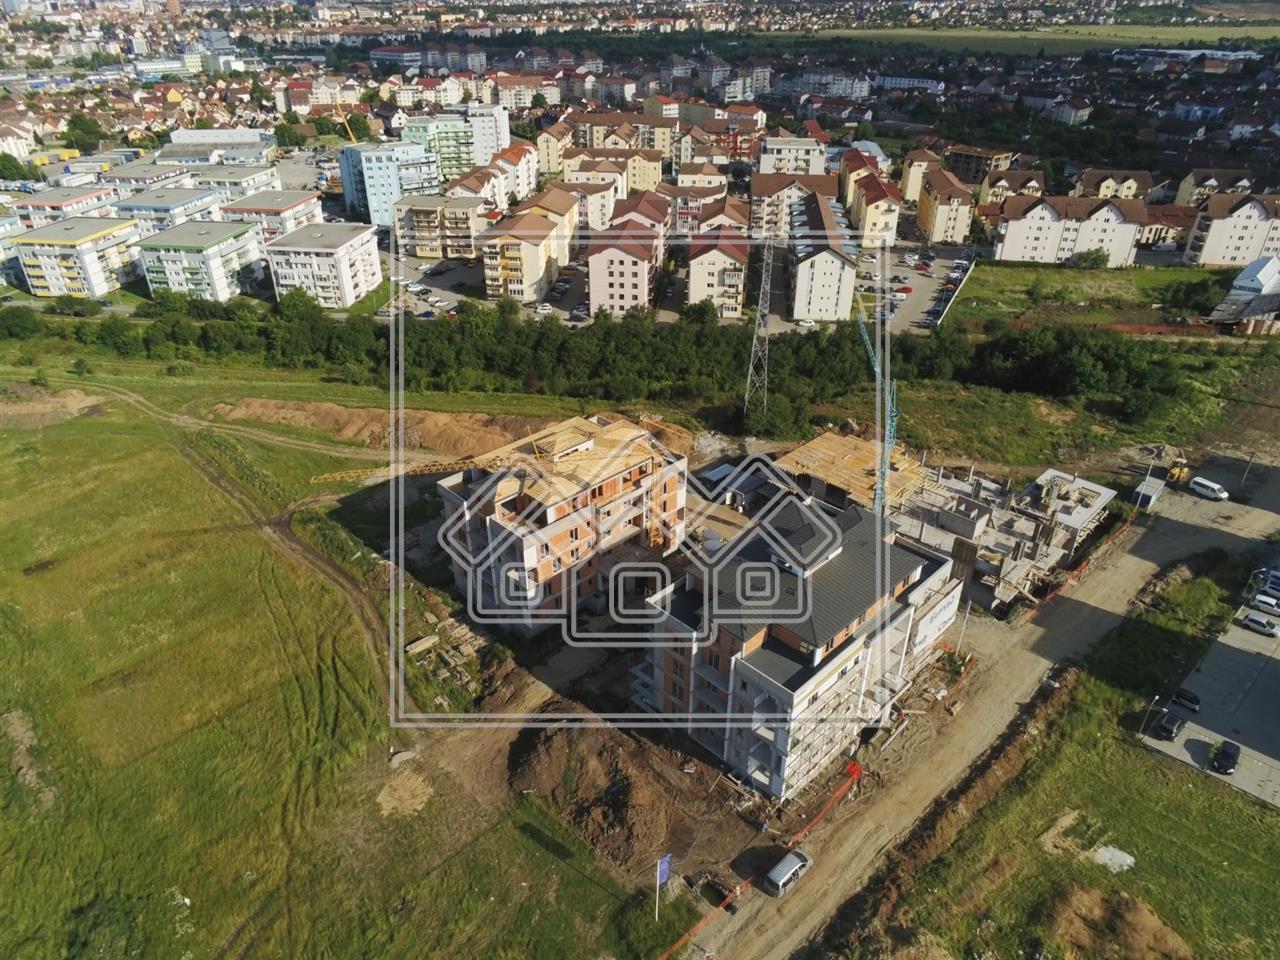 Penthouse de vanzare in Sibiu - C4 - 2 camere + terasa mare - Turnisor